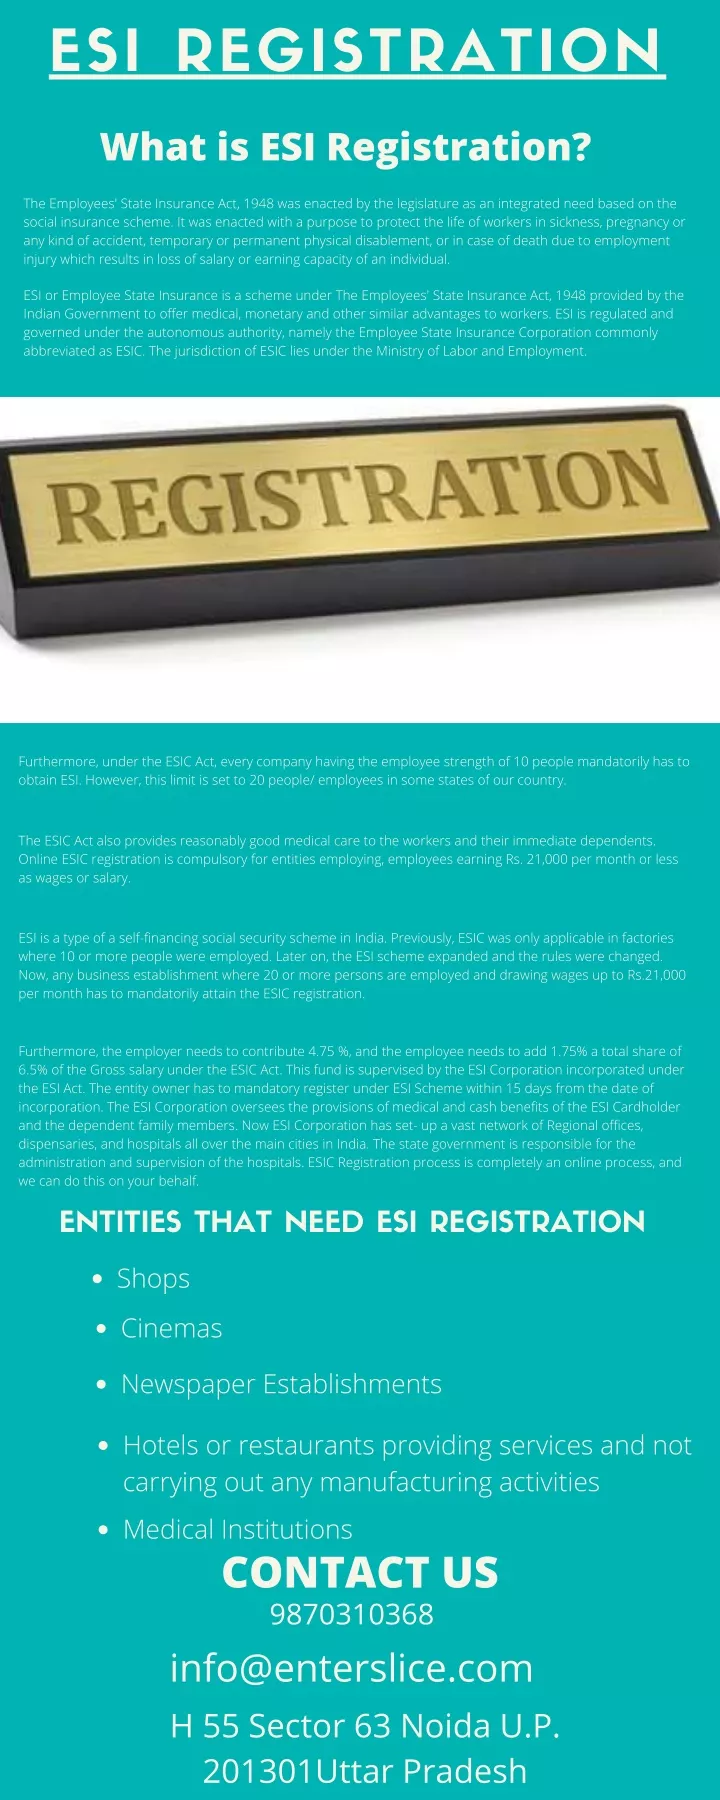 esi registration